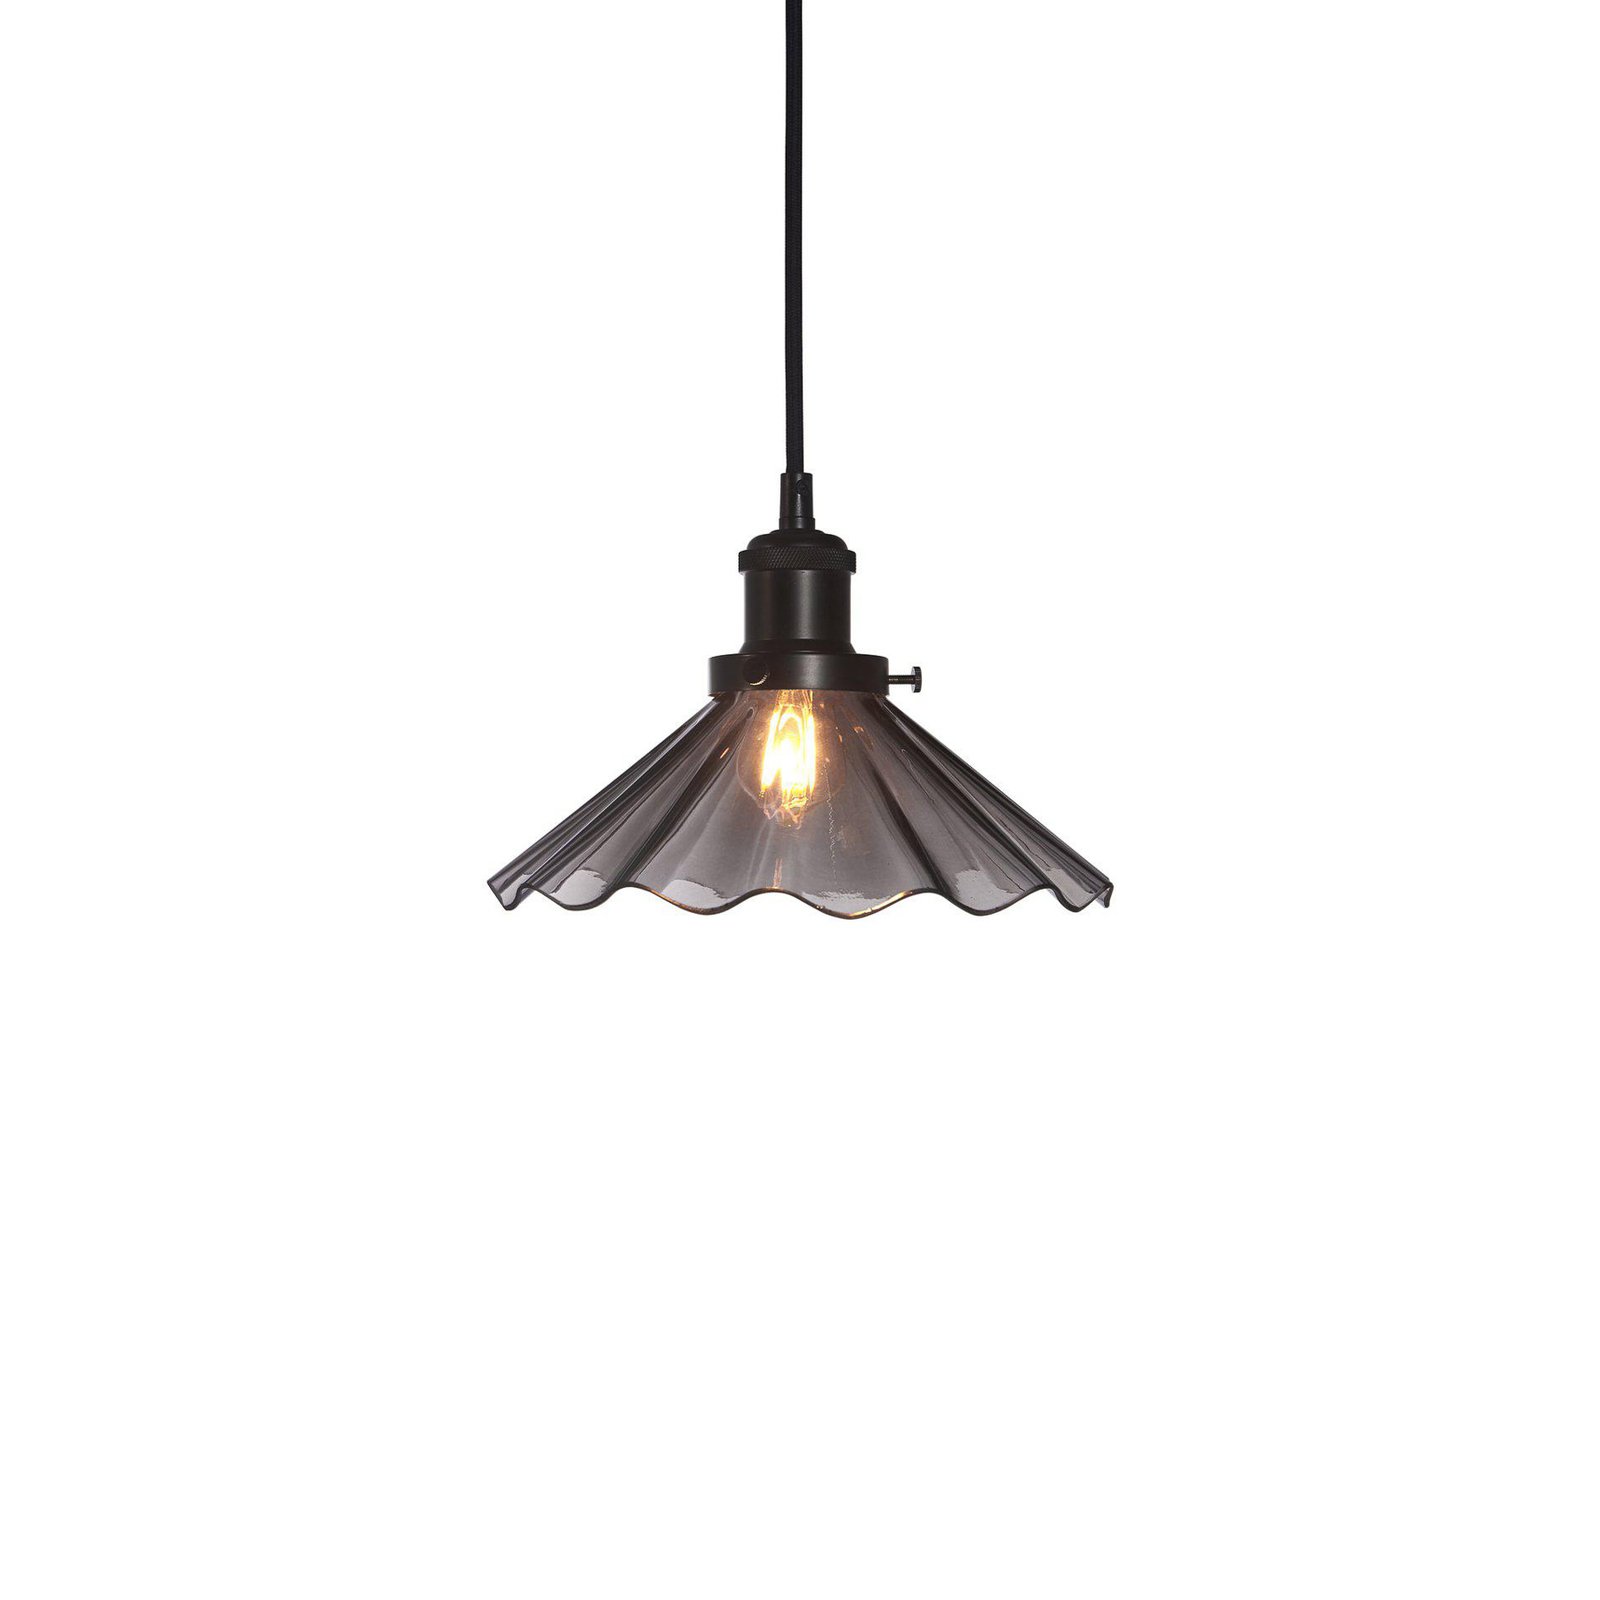 PR Home hanglamp August, zwart, Ø 25 cm, gegolfd glas